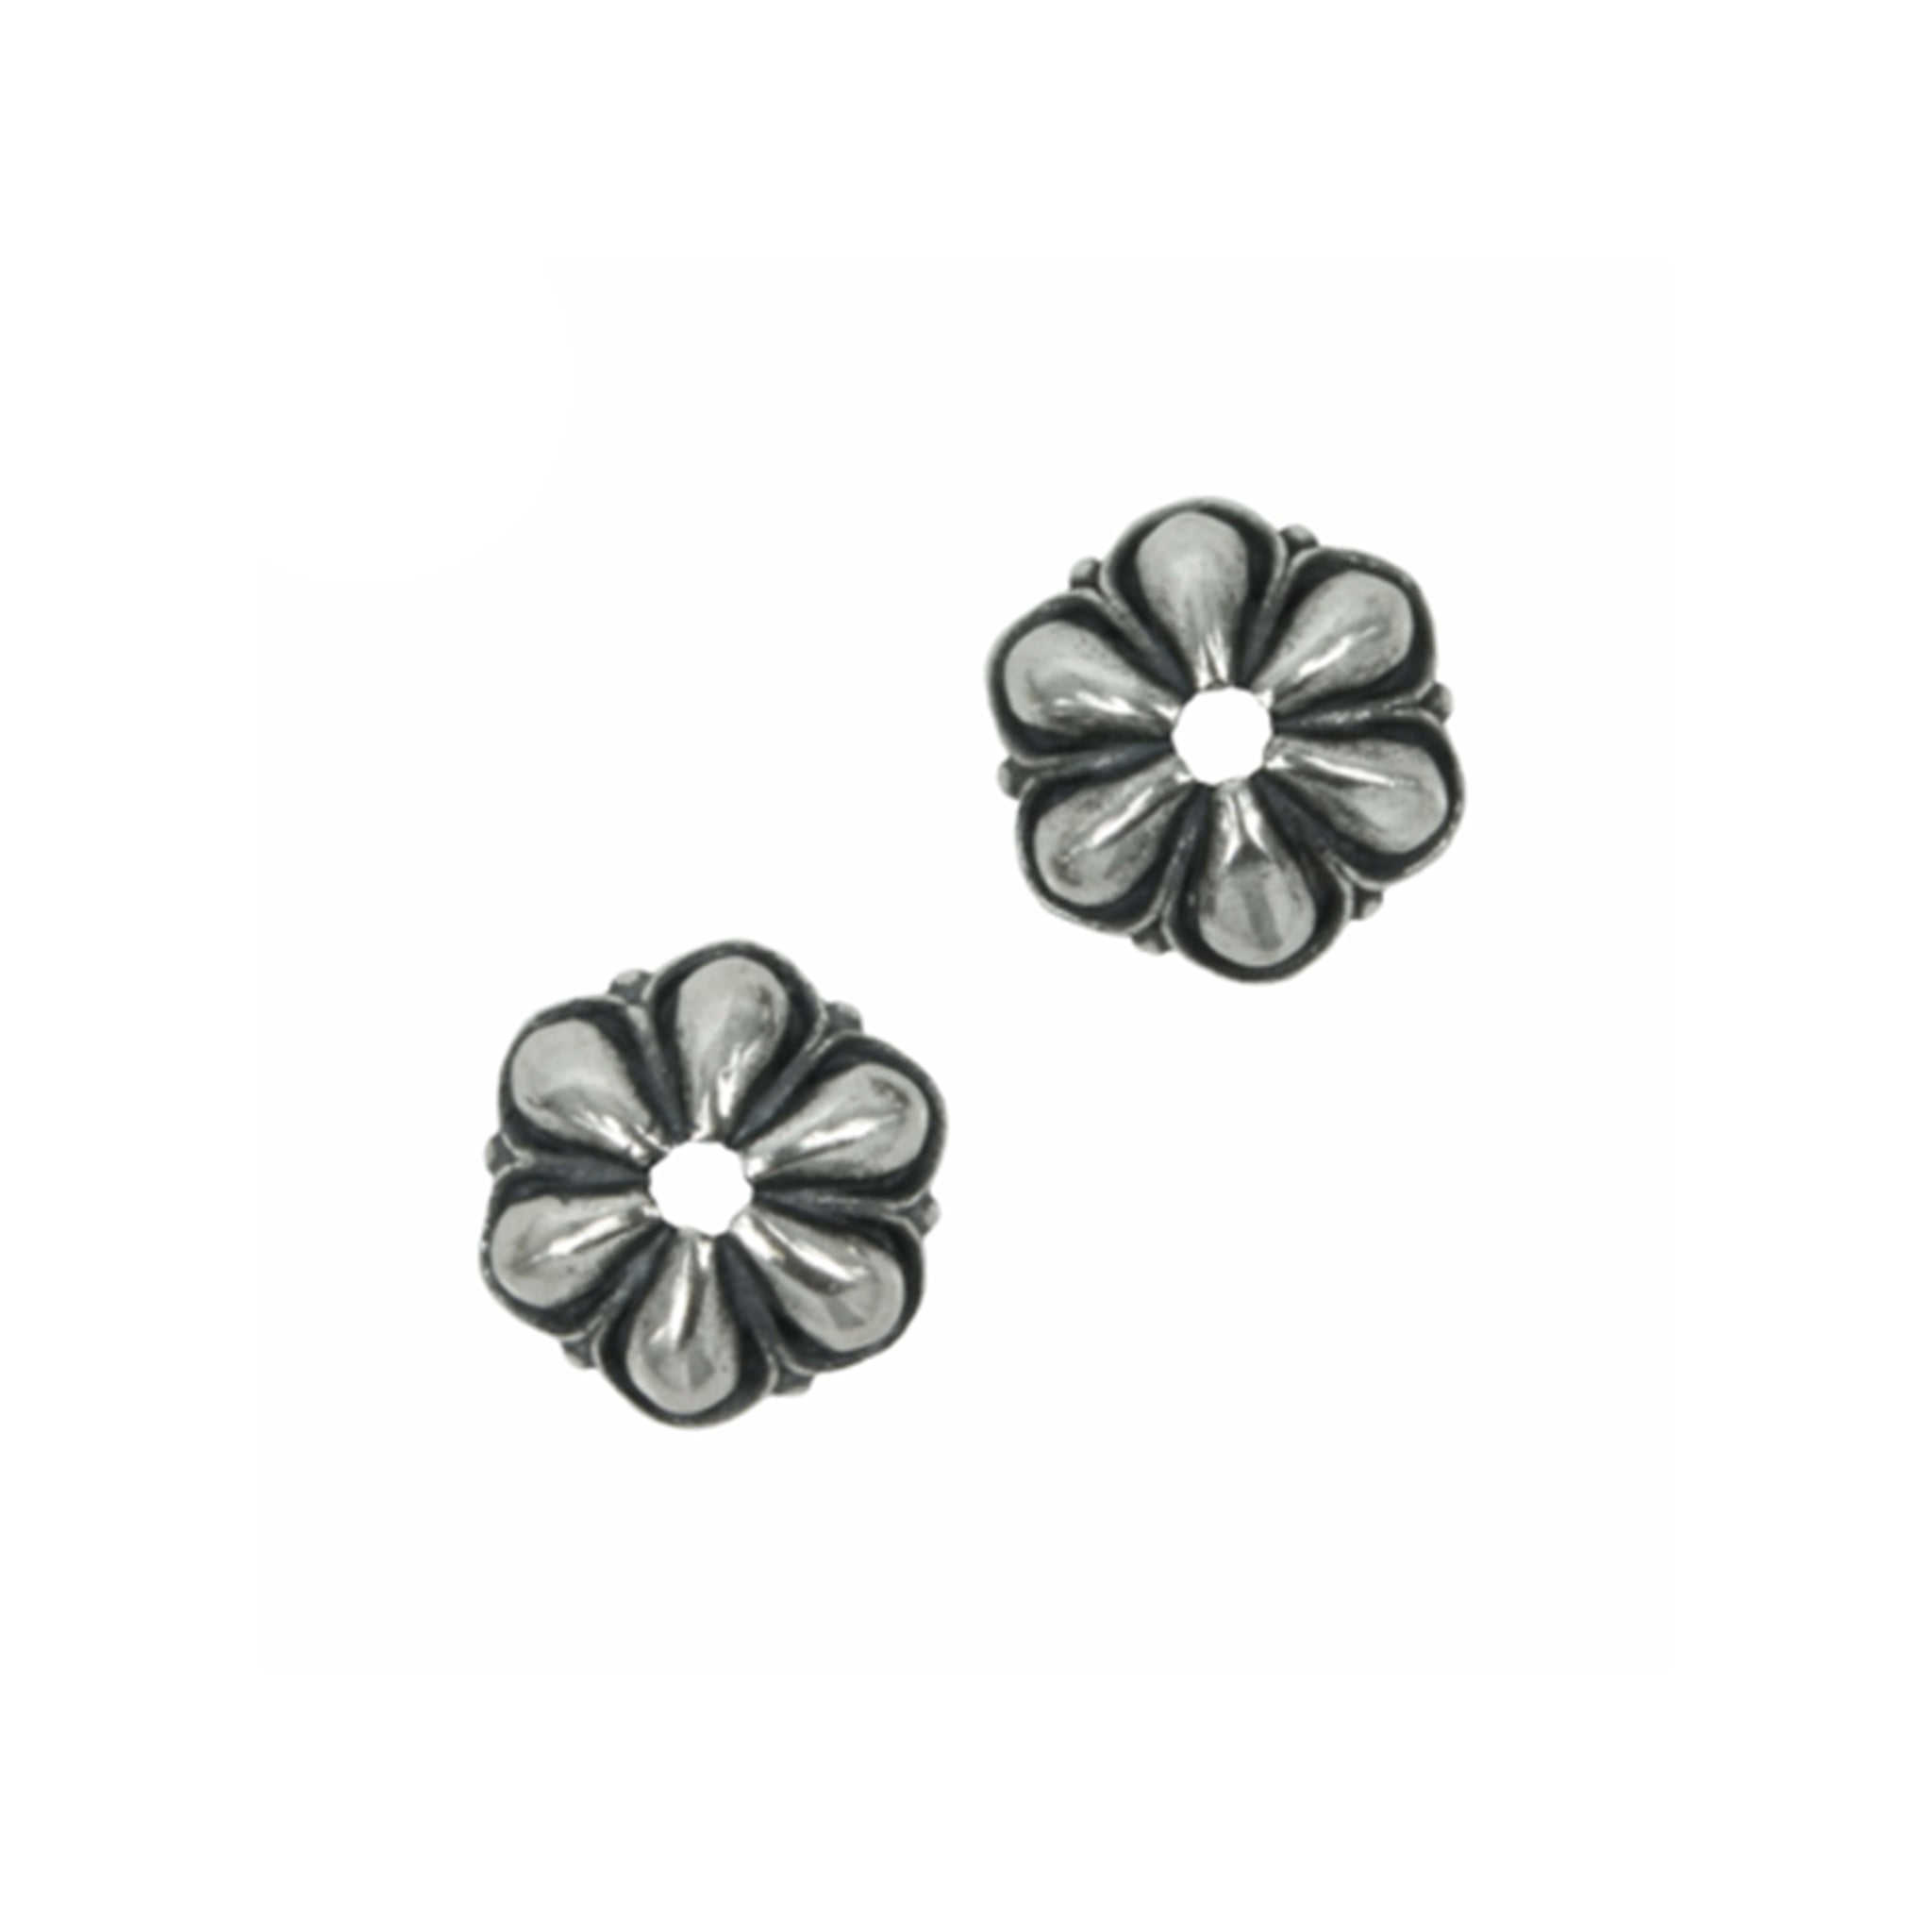 Domed Flower Bead Cap in Sterling Silver 9.5mm